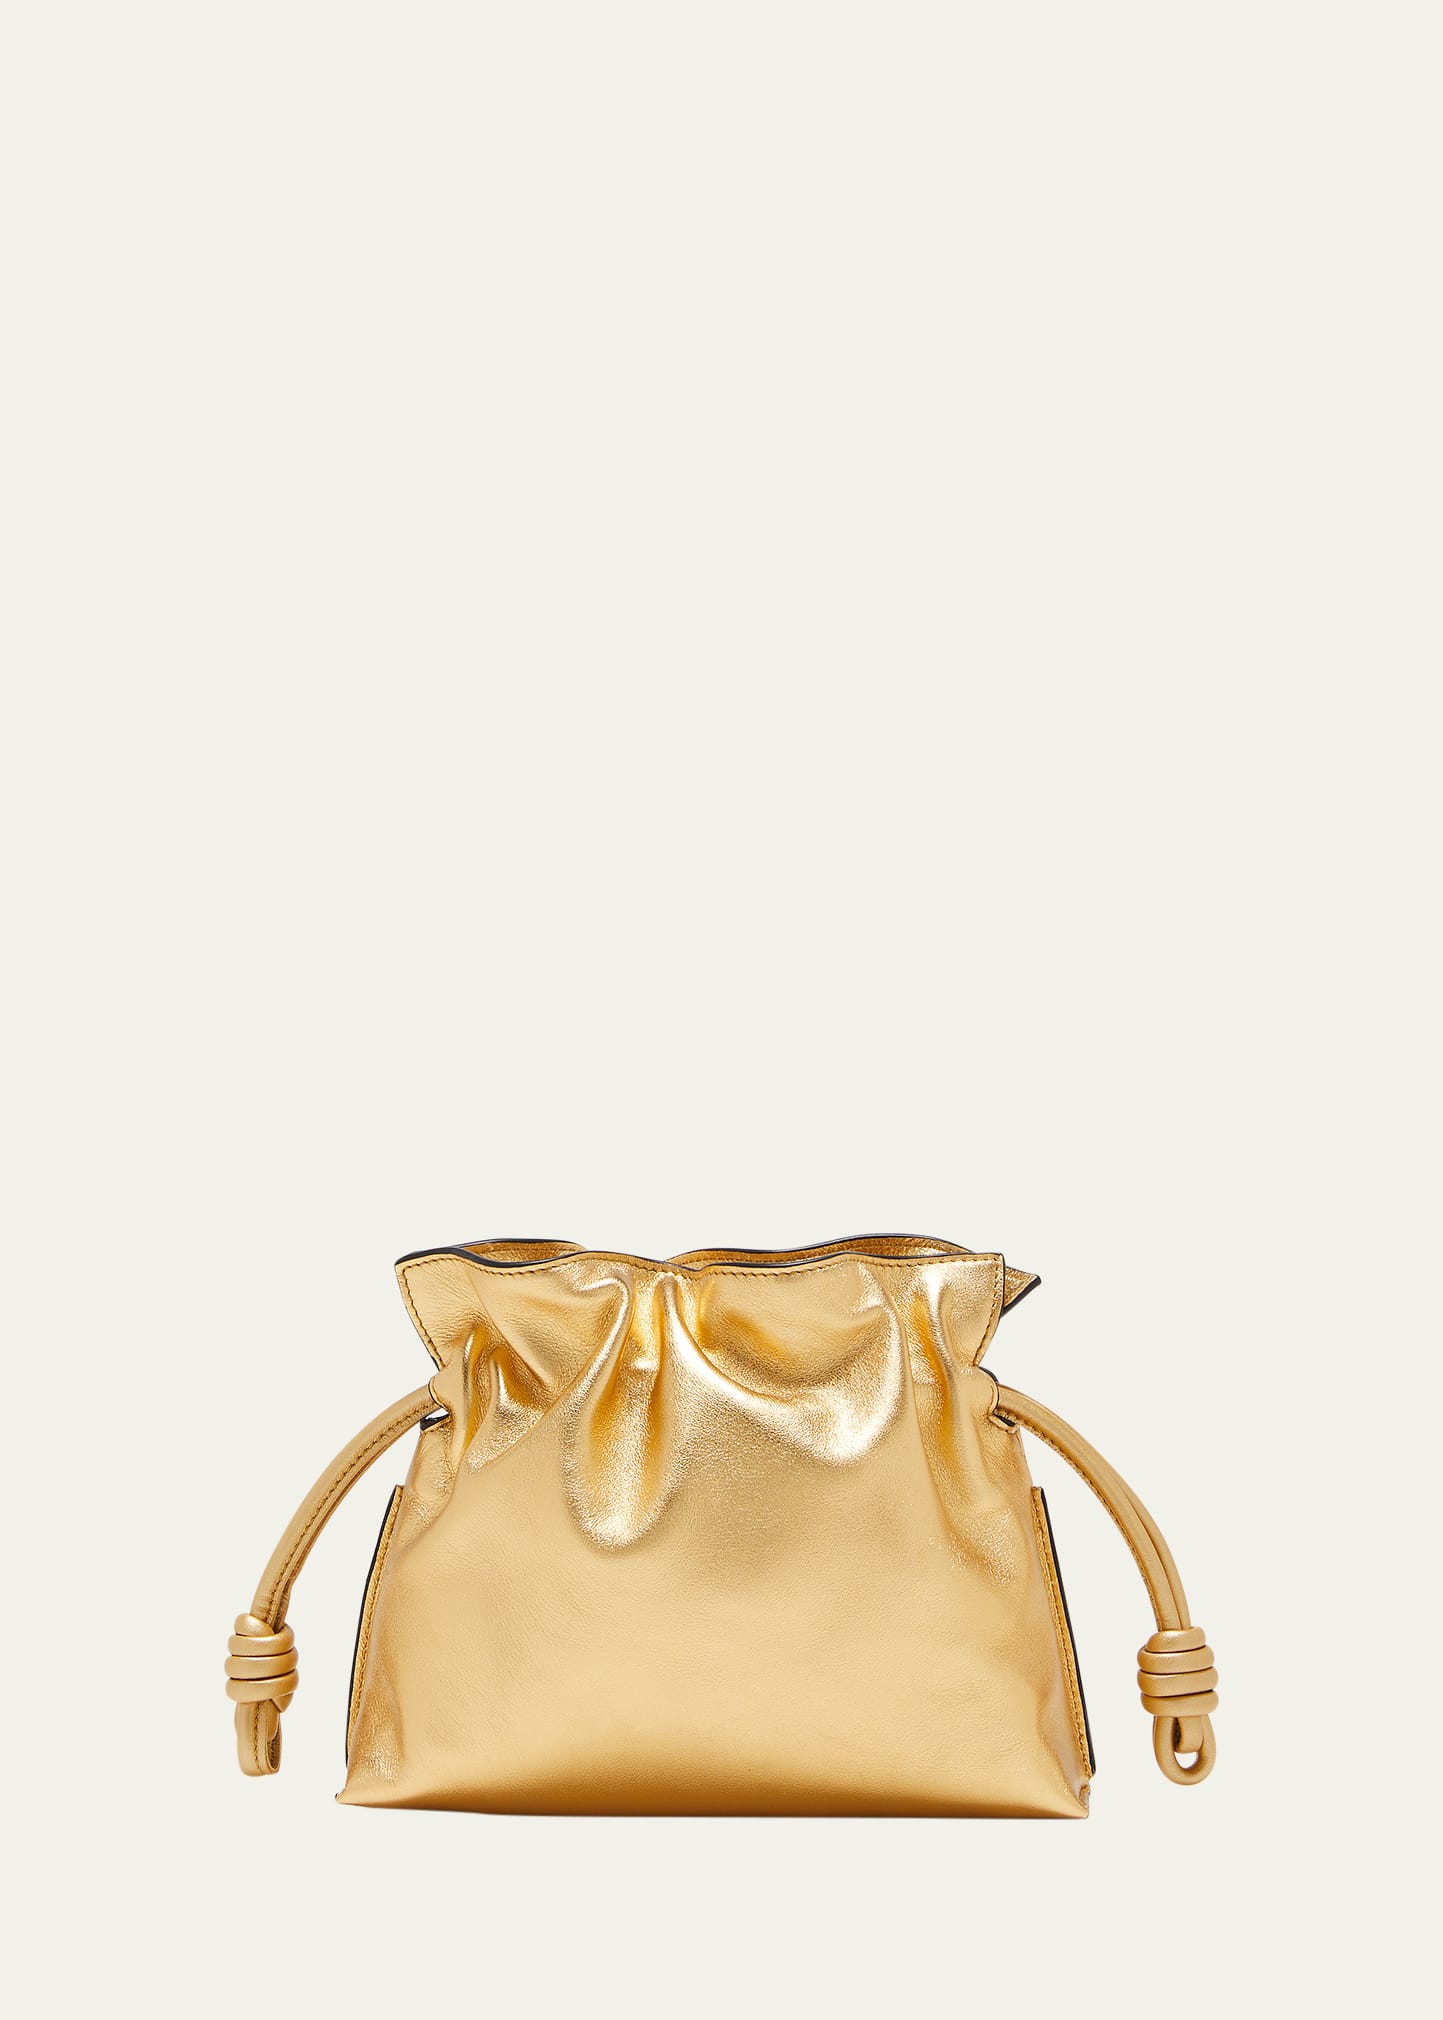 Clutch Bag Vs Handbag: Which is More Versatile? - Judith Leiber